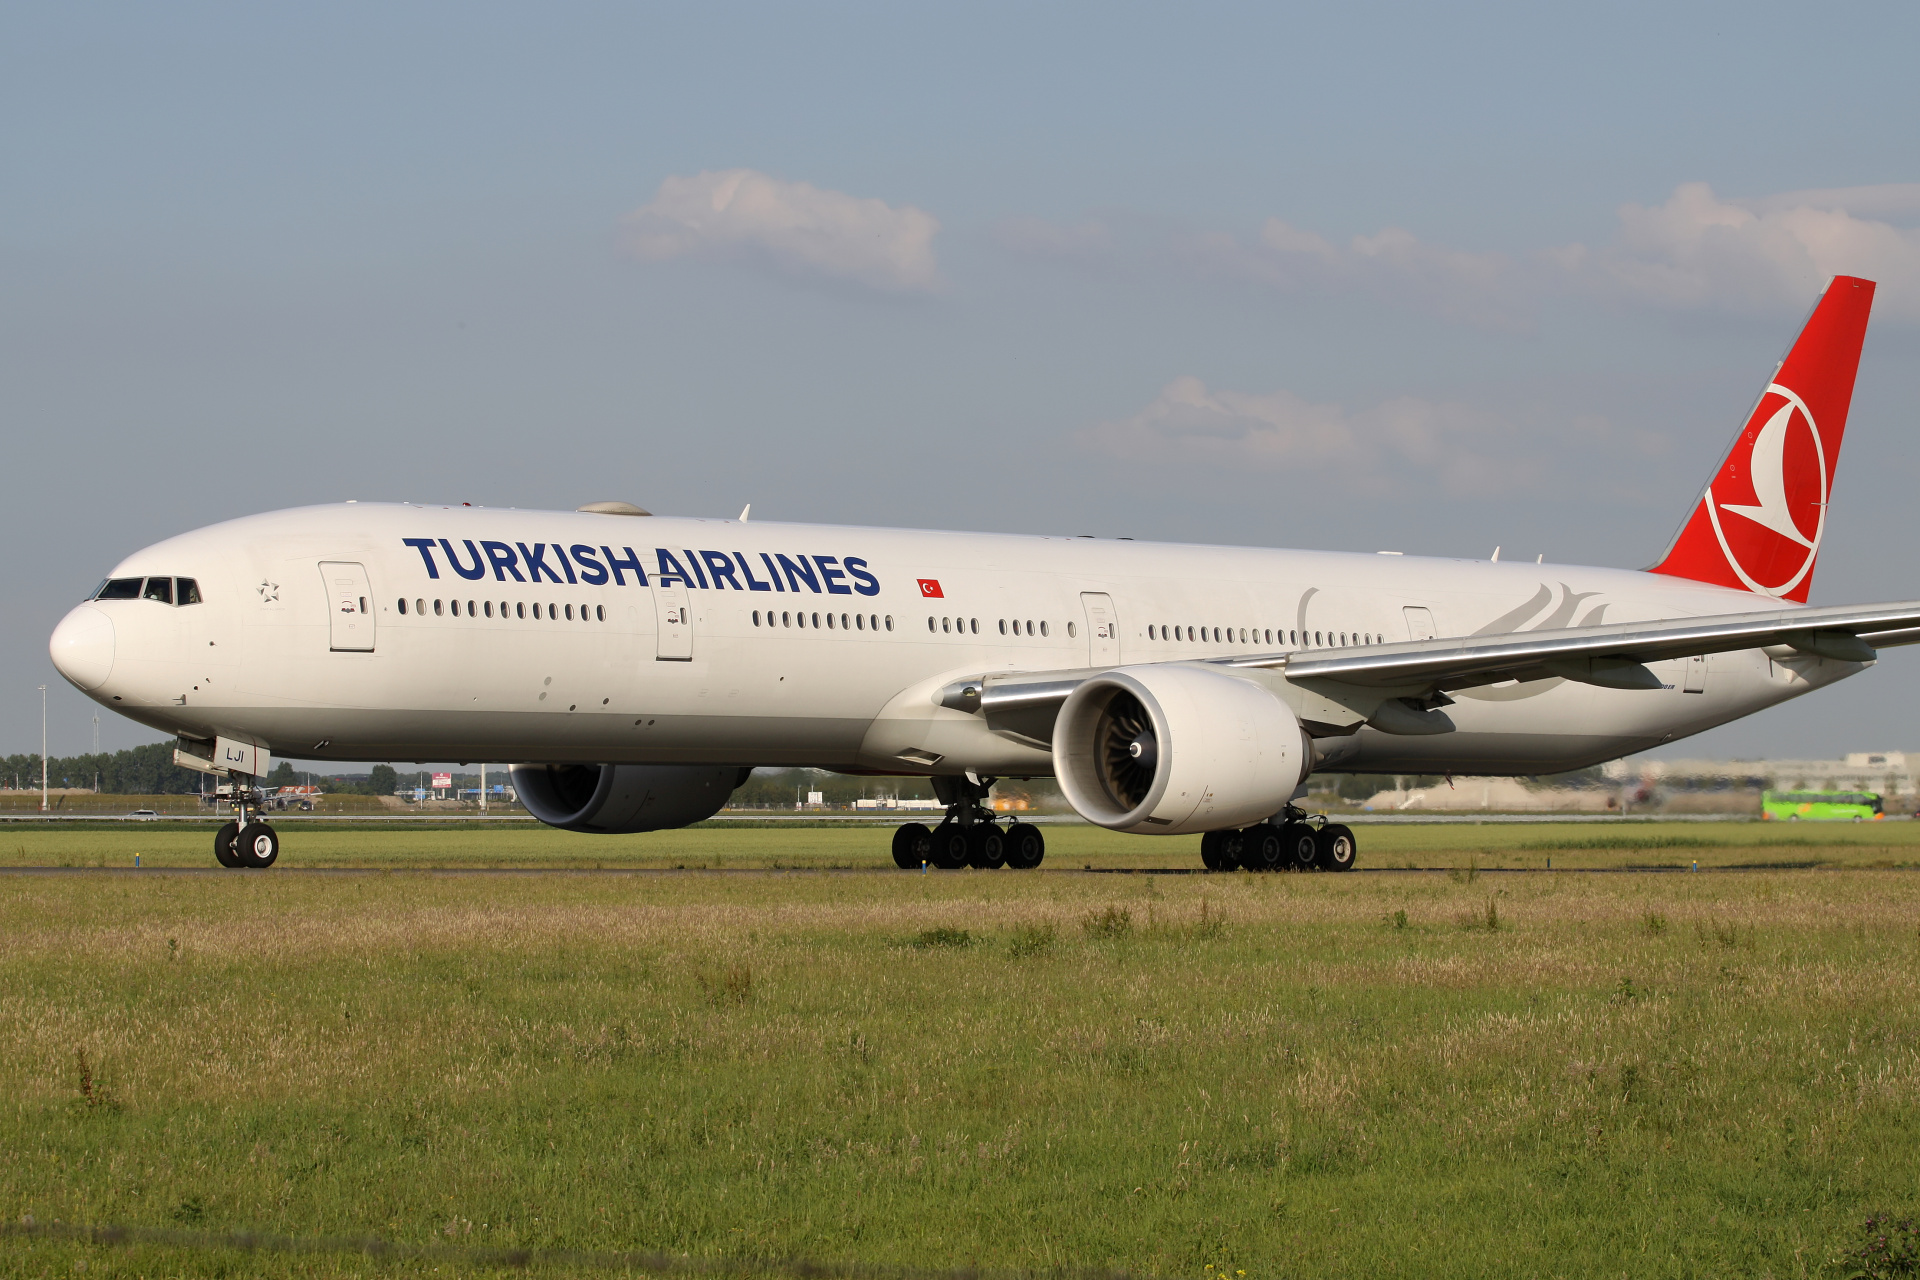 TC-LJI, THY Turkish Airlines (Aircraft » Schiphol Spotting » Boeing 777-300ER)